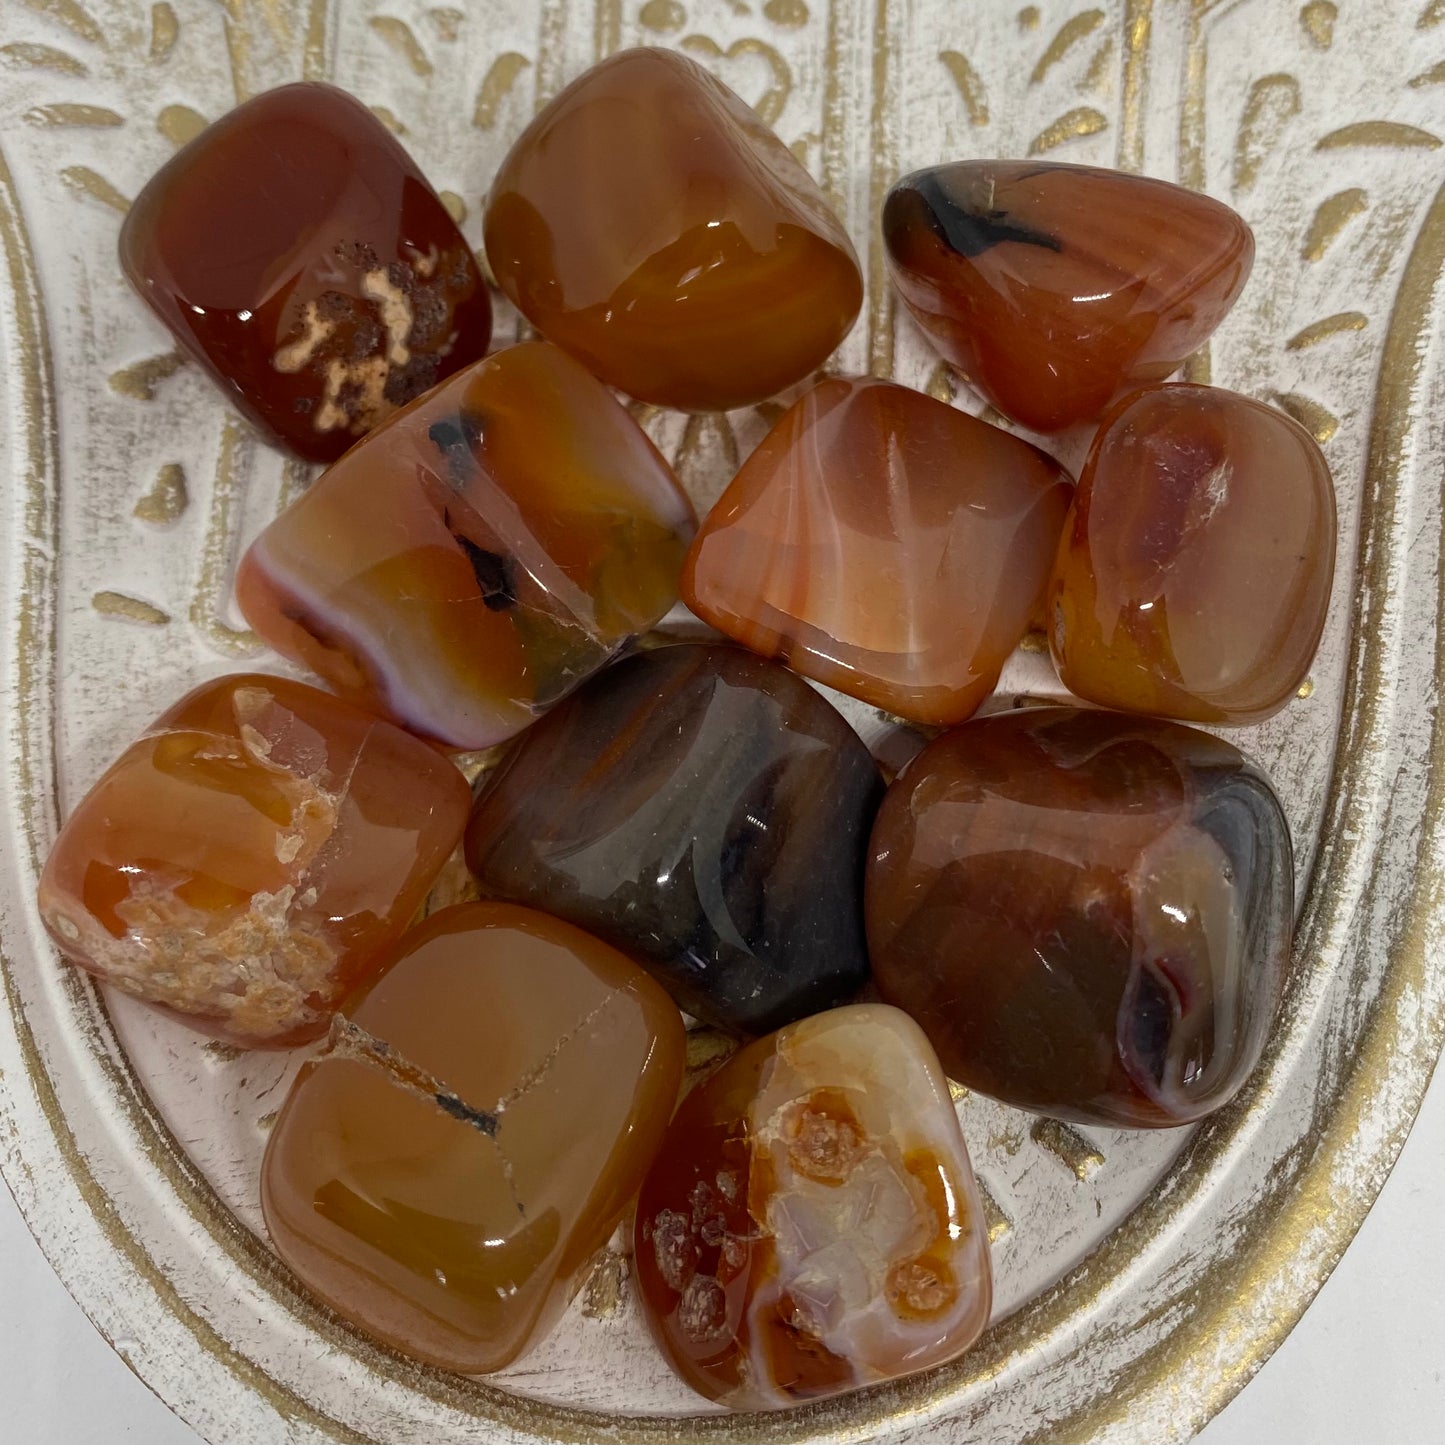 Carnelian healing crystal and tumble gemstones